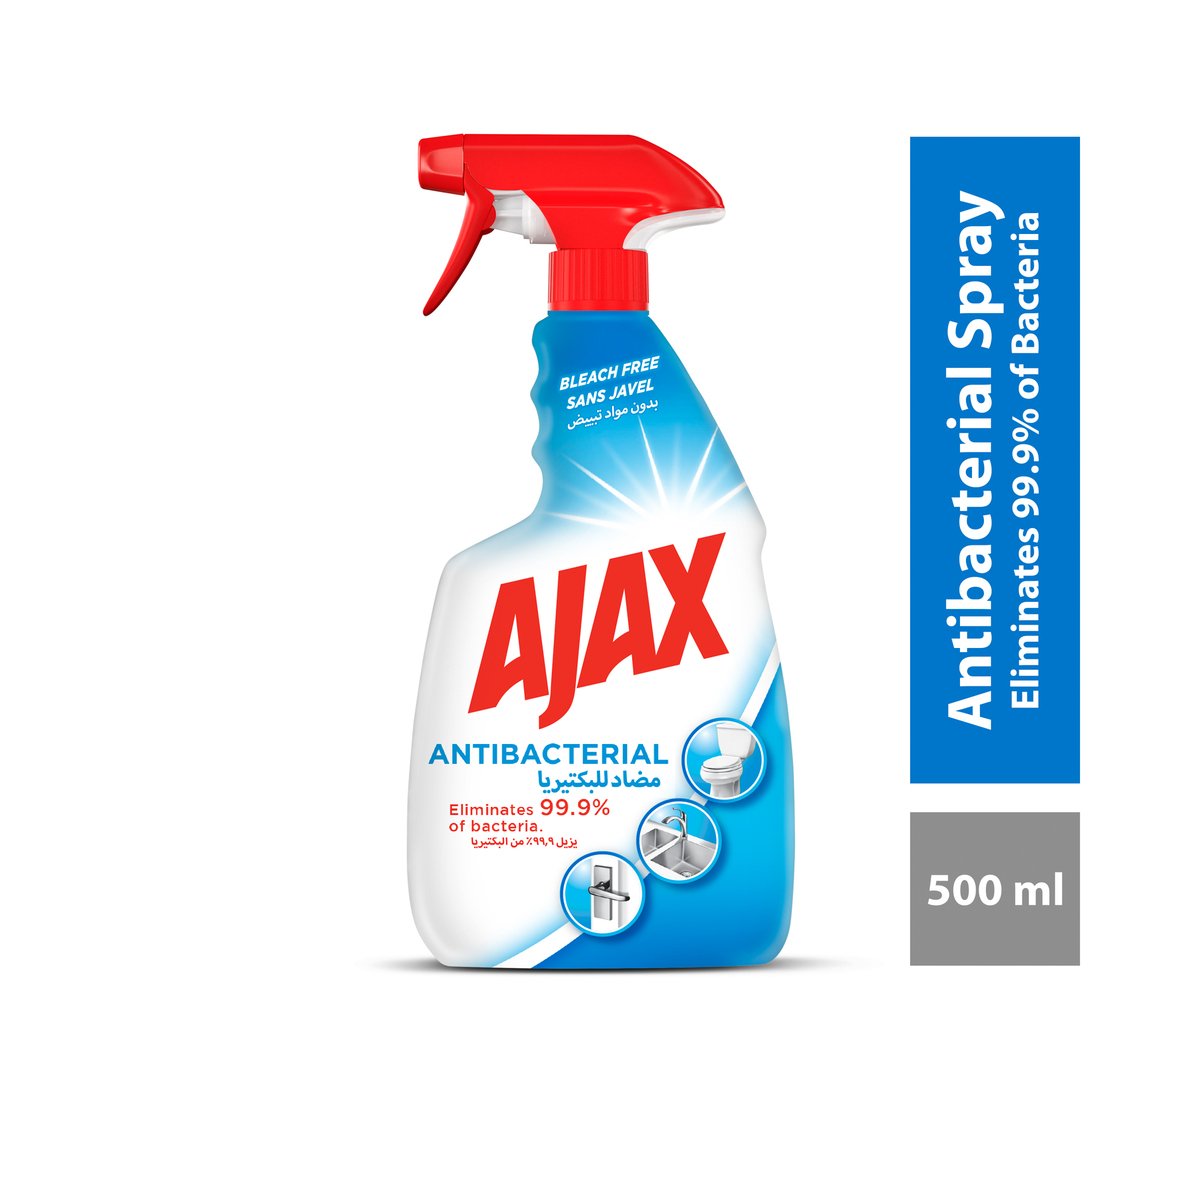 Ajax Antibacterial Multi Surface Cleaner Disinfectant Sanitizer Spray Bleach Free  500ml